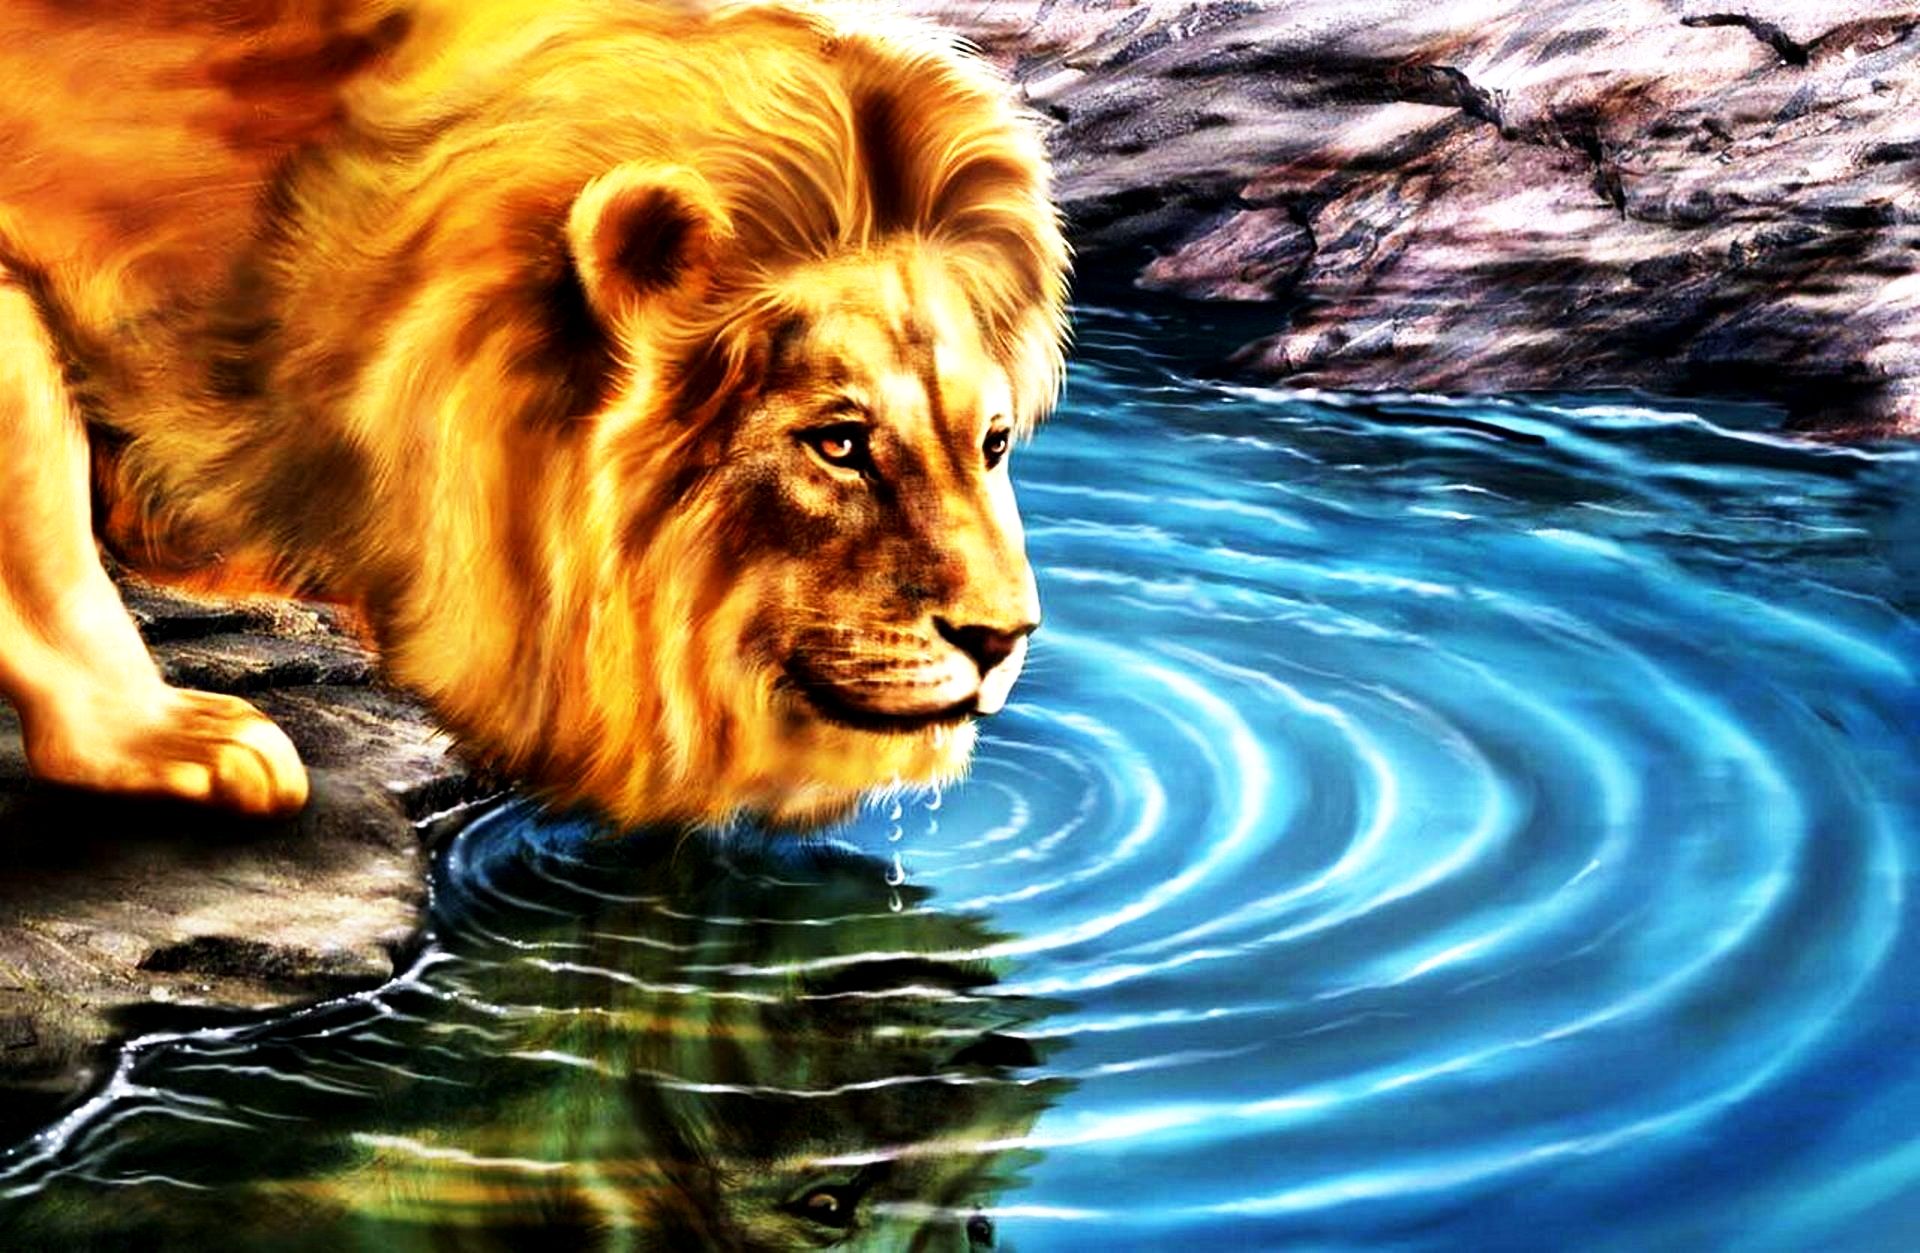 3d Lion Image Photos Of Wallpaper For Desktop Here We Have